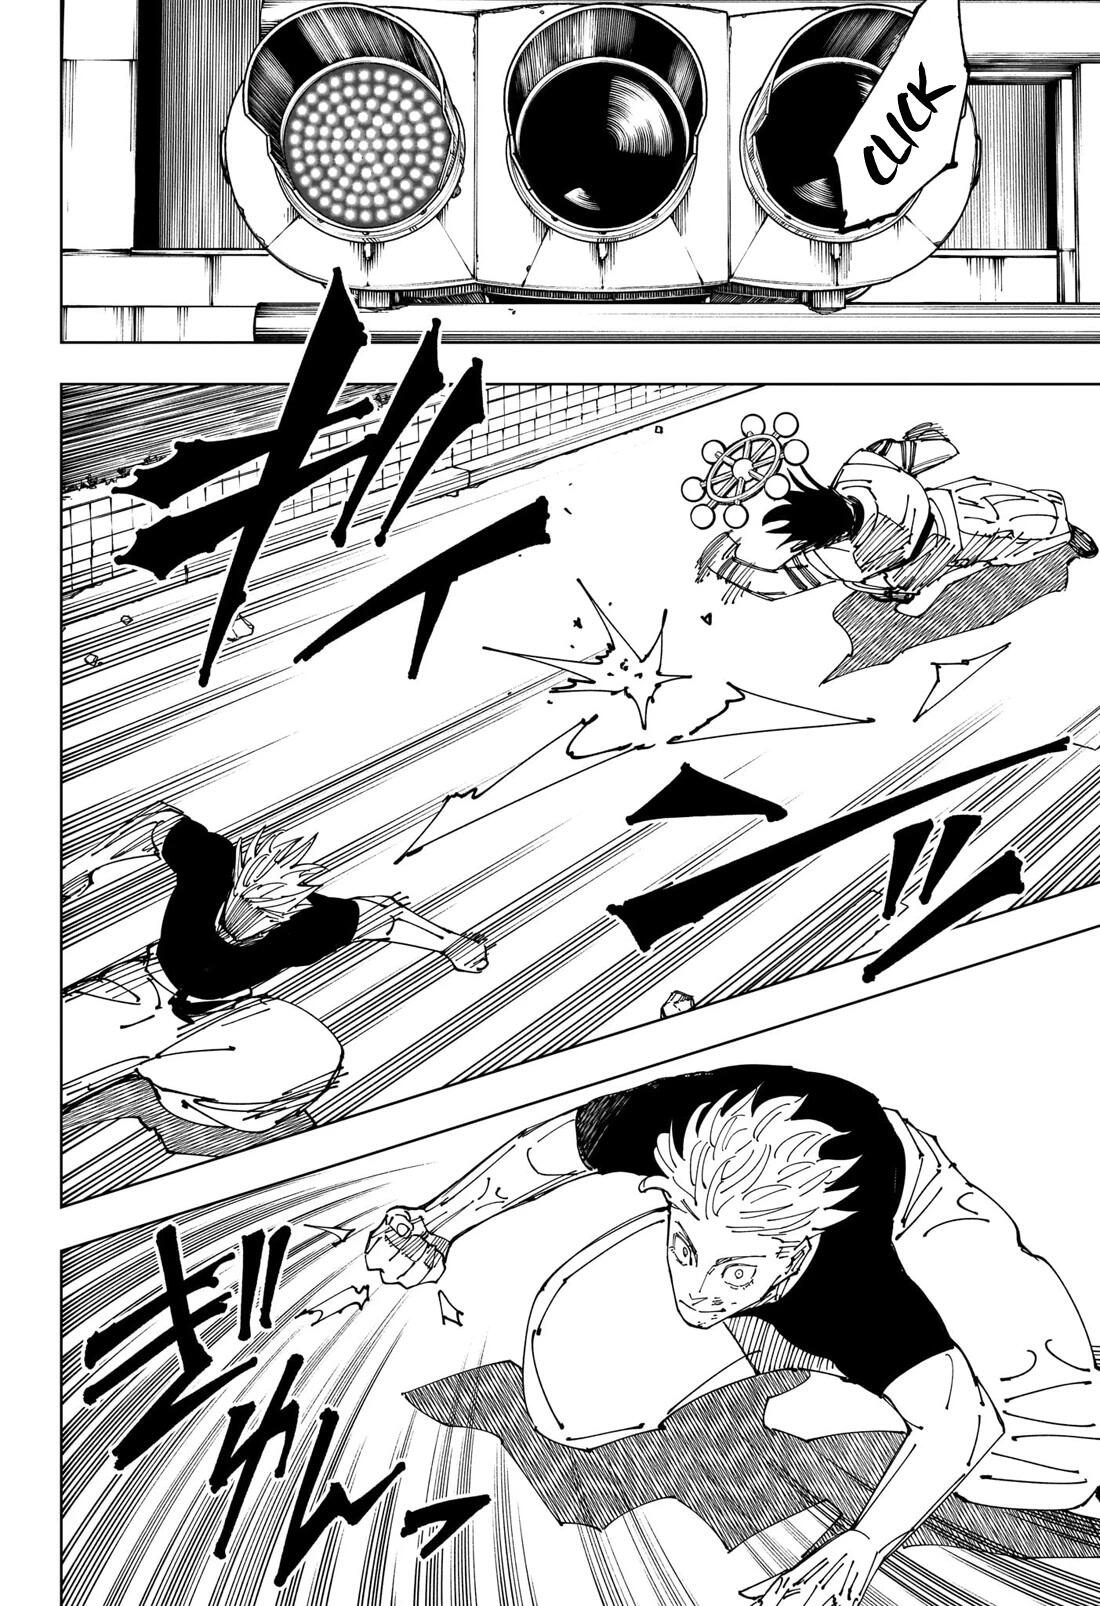 Jujutsu Kaisen Chapter 231: The Decisive Battle In The Uninhabited, Demon-Infested Shinjuku ⑨ page 14 - Mangakakalot